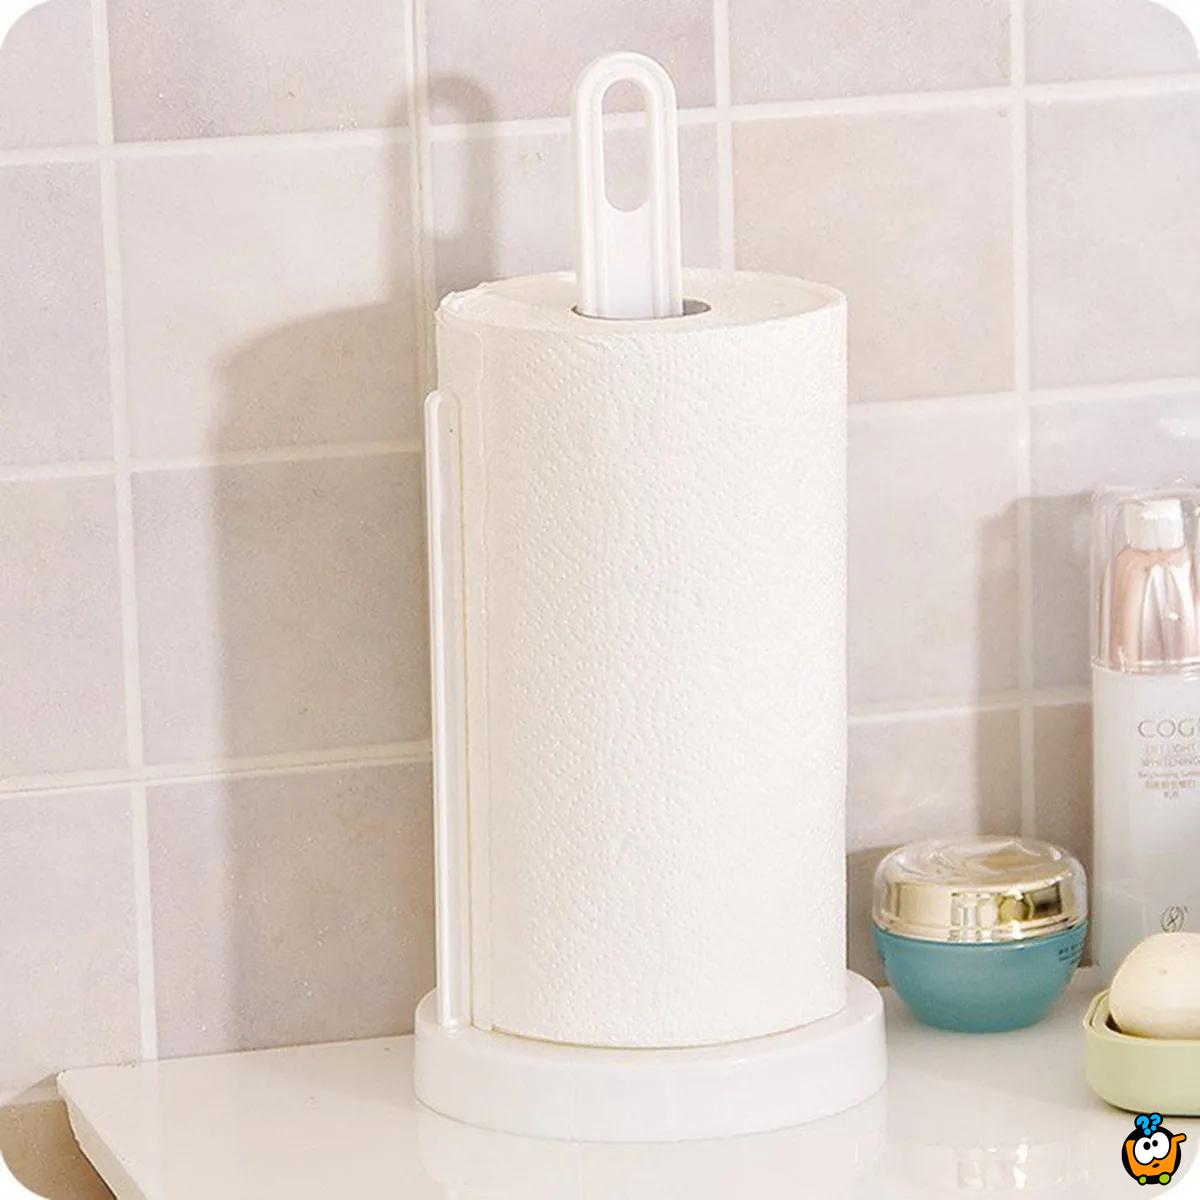 Vertikalni držač ubrusa i toalet papira